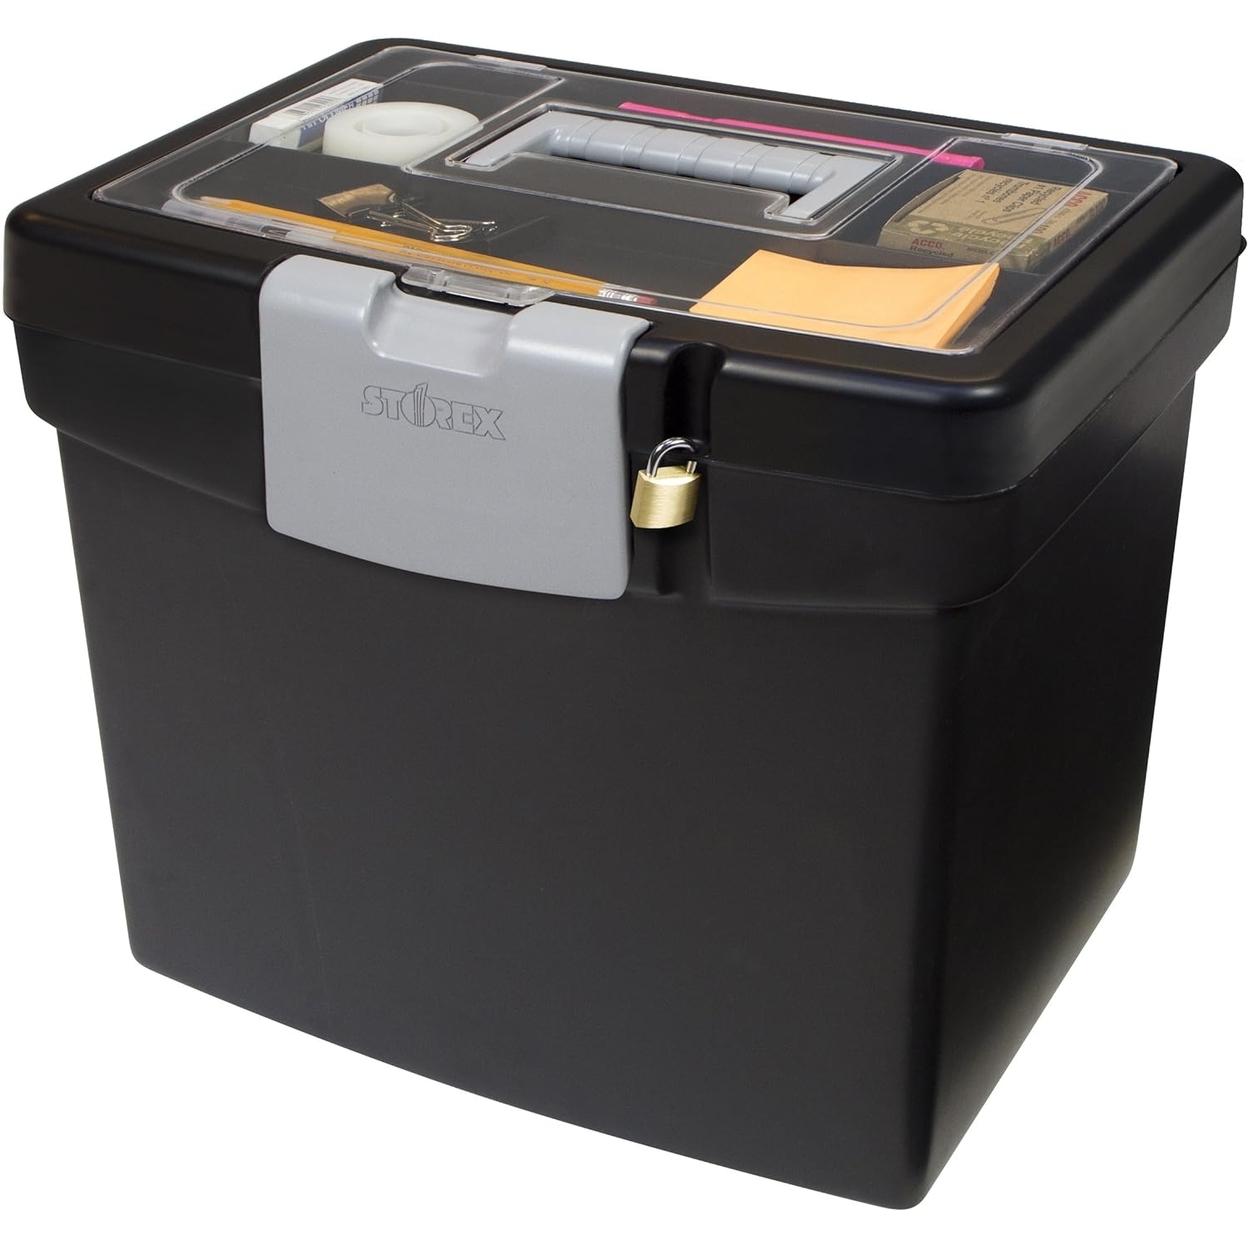 Storex Portable File Box With XL Lid, Black